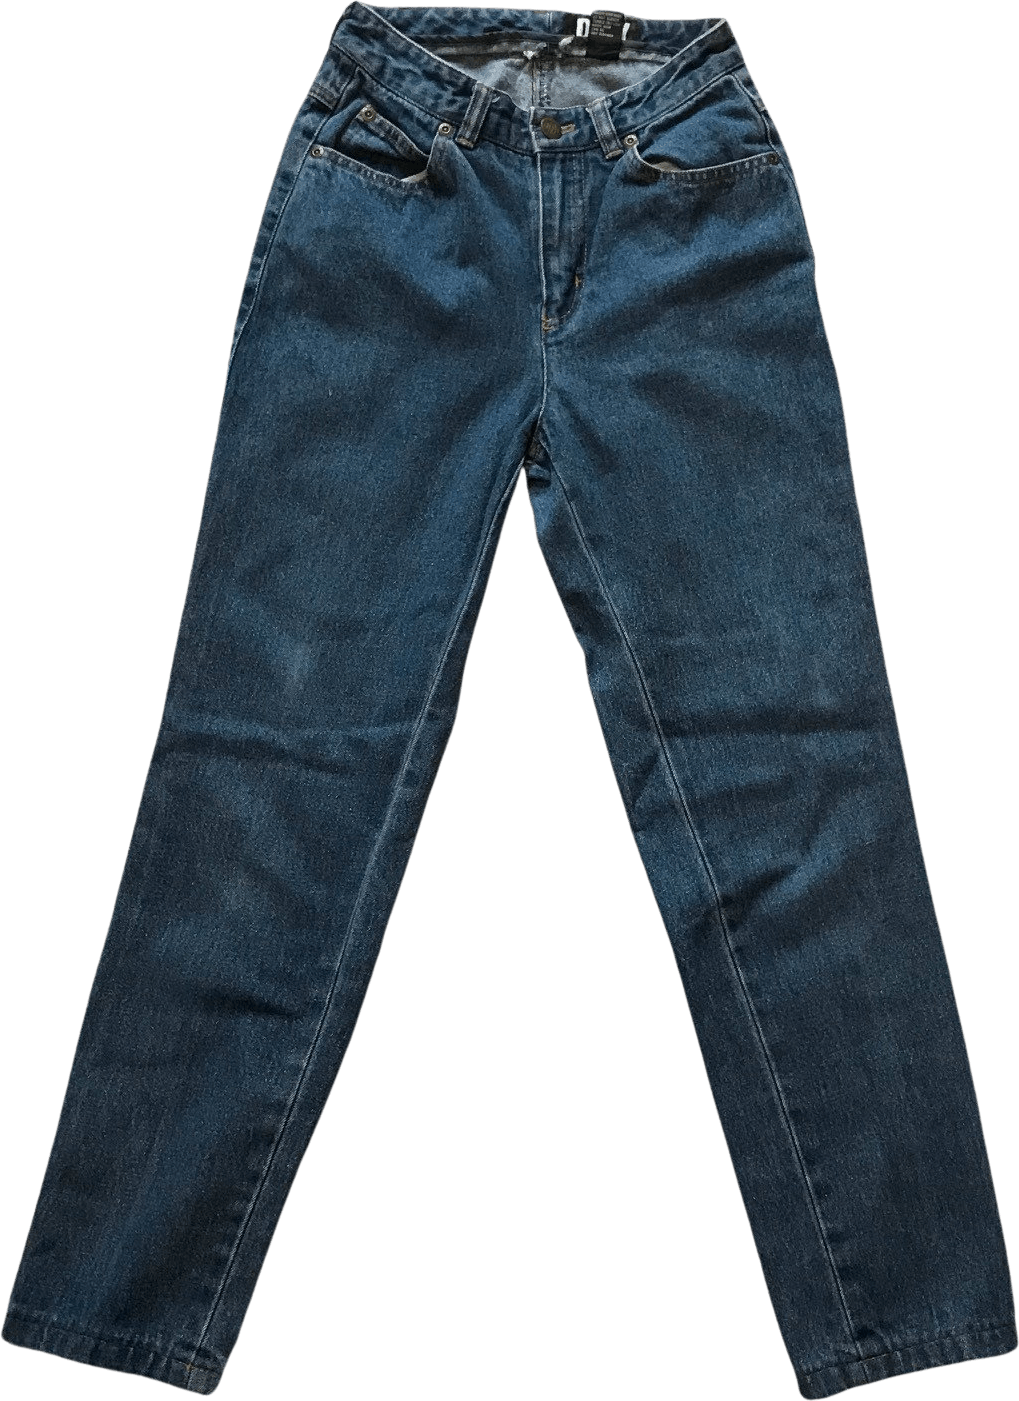 Vintage 90s Medium Wash High Waist Jeans By Dkny Shop Thrilling 5555